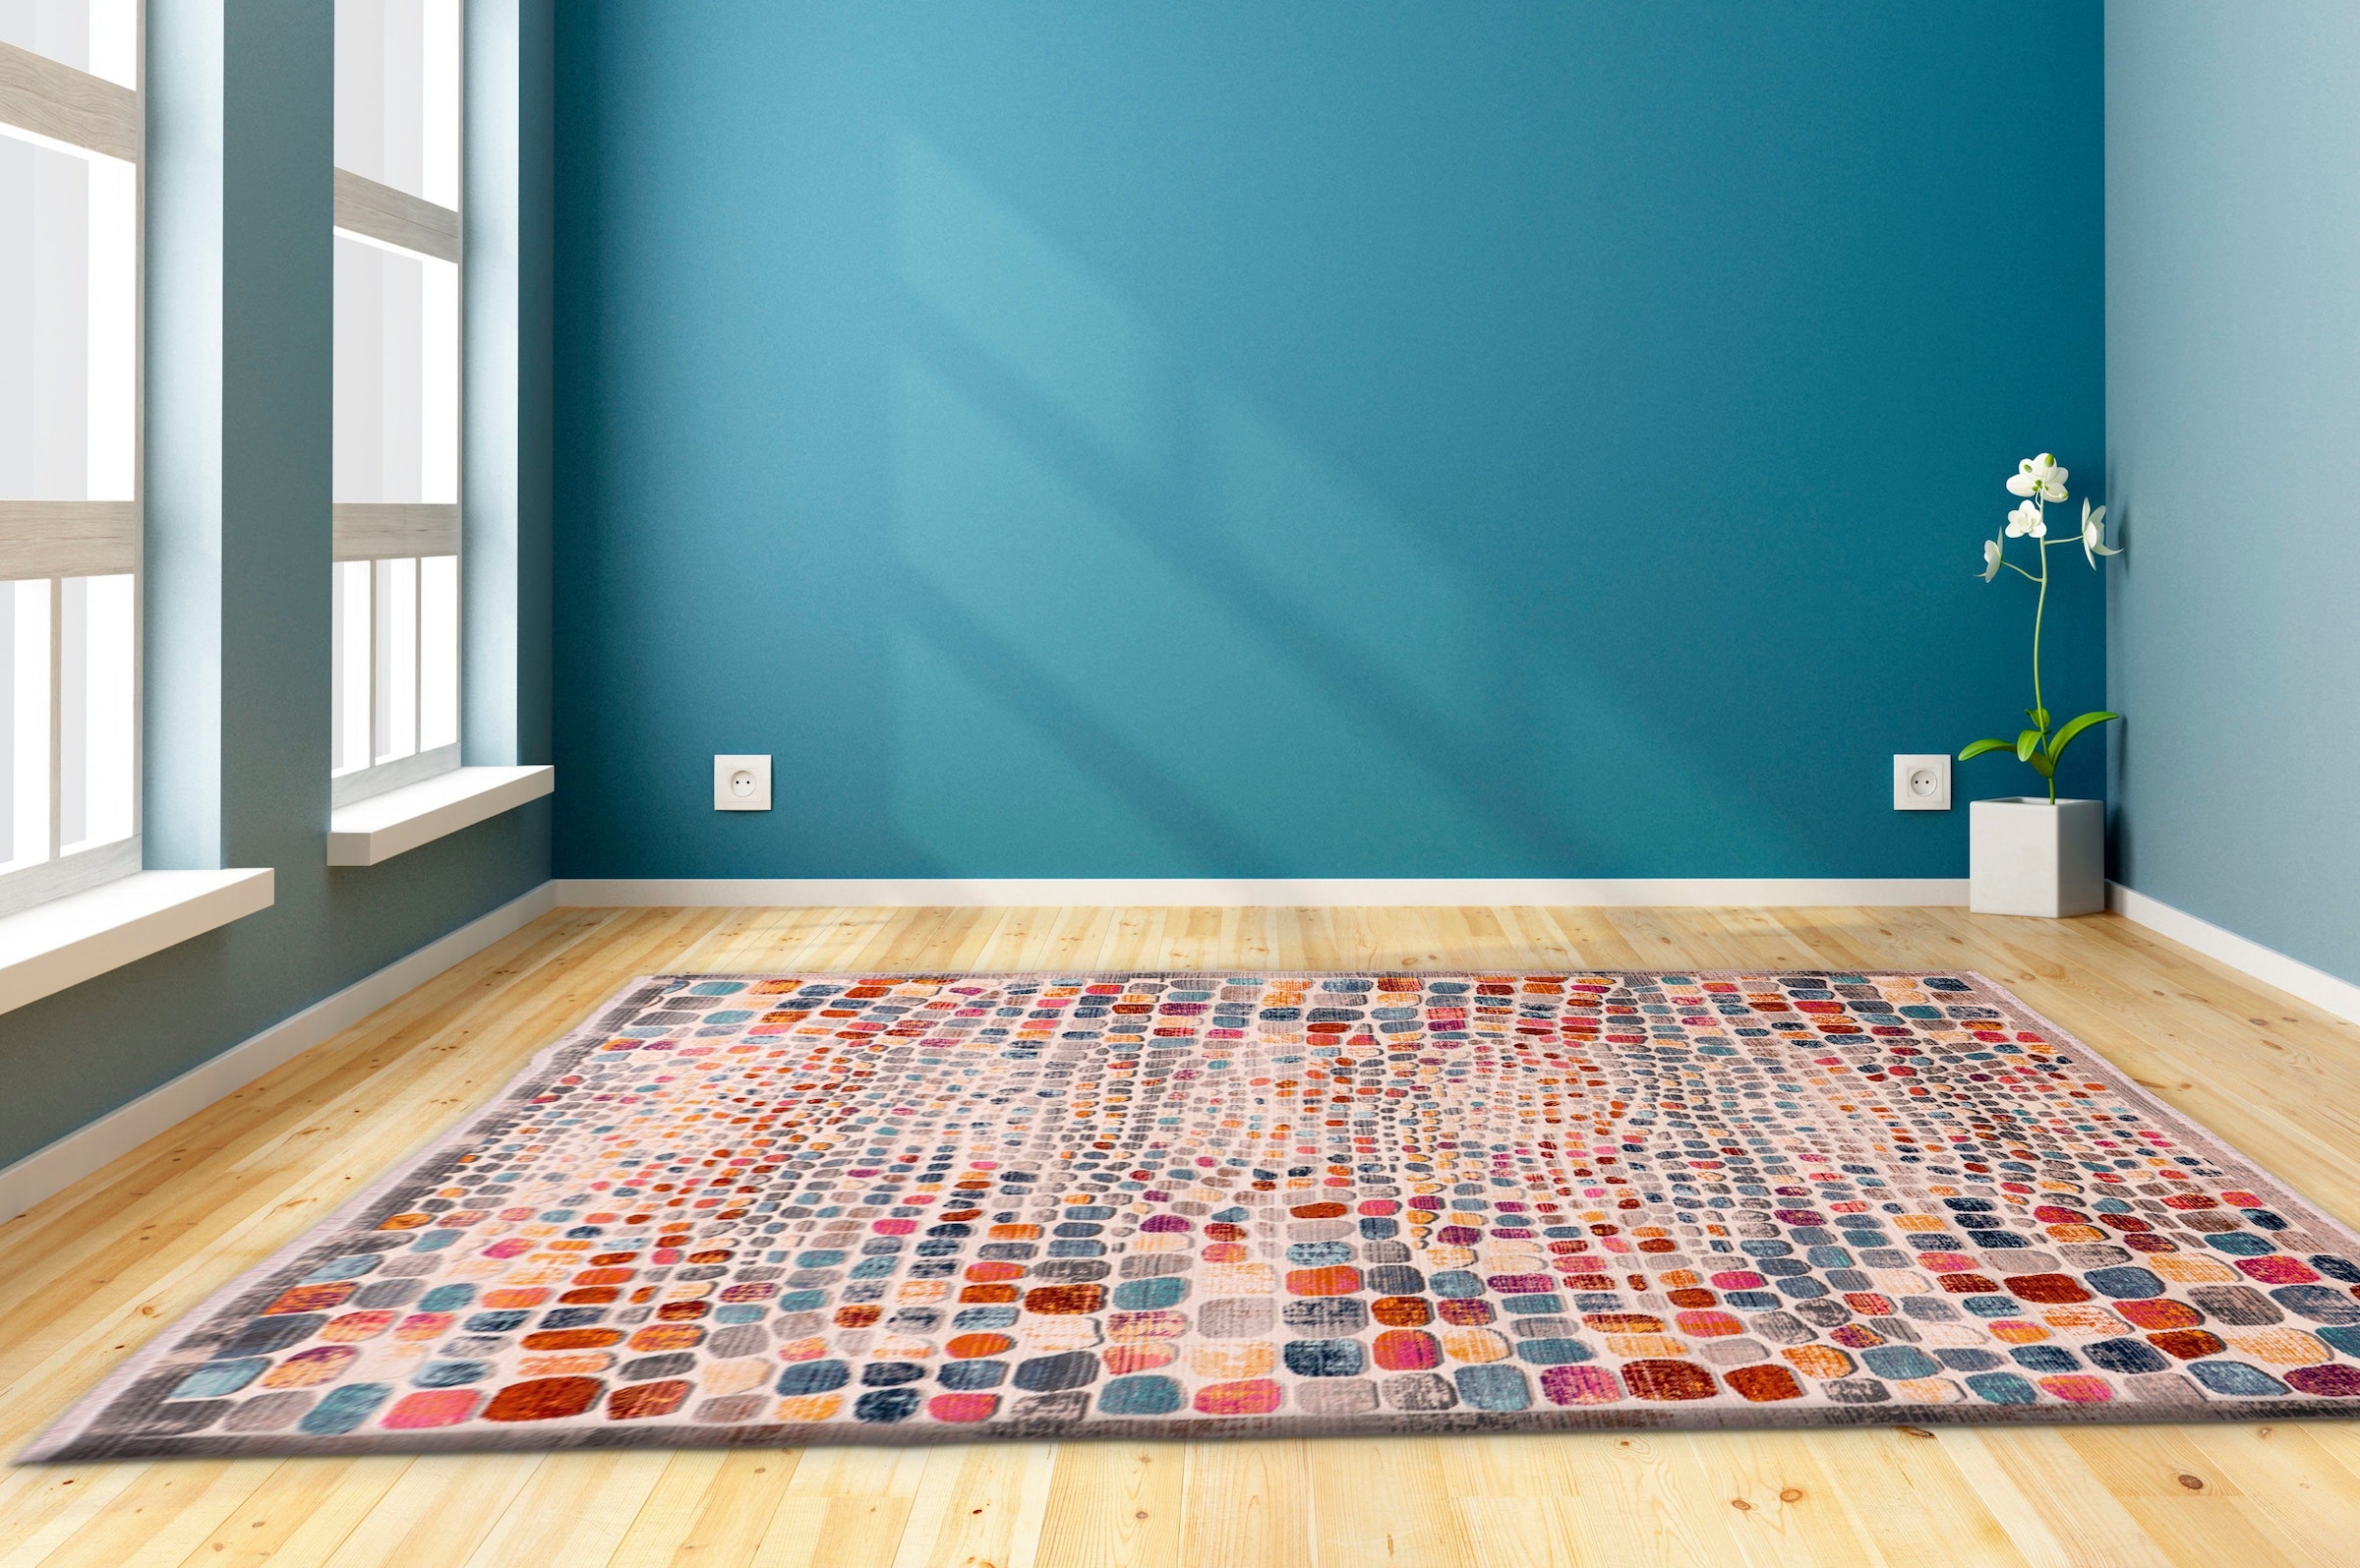 Home affaire Teppich »Benji«, rechteckig, farbenfrohes Mosaik-Muster, Kurzflor, mit Fransen